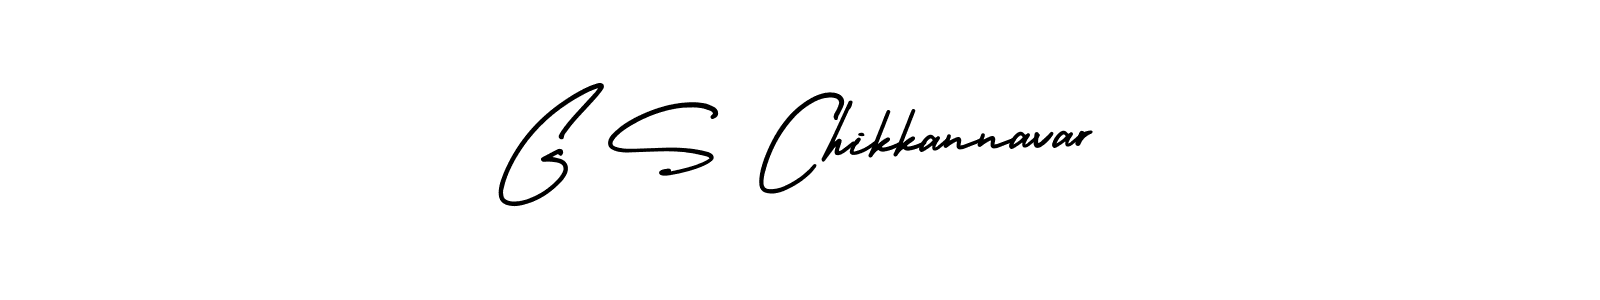 How to Draw G S Chikkannavar signature style? AmerikaSignatureDemo-Regular is a latest design signature styles for name G S Chikkannavar. G S Chikkannavar signature style 3 images and pictures png